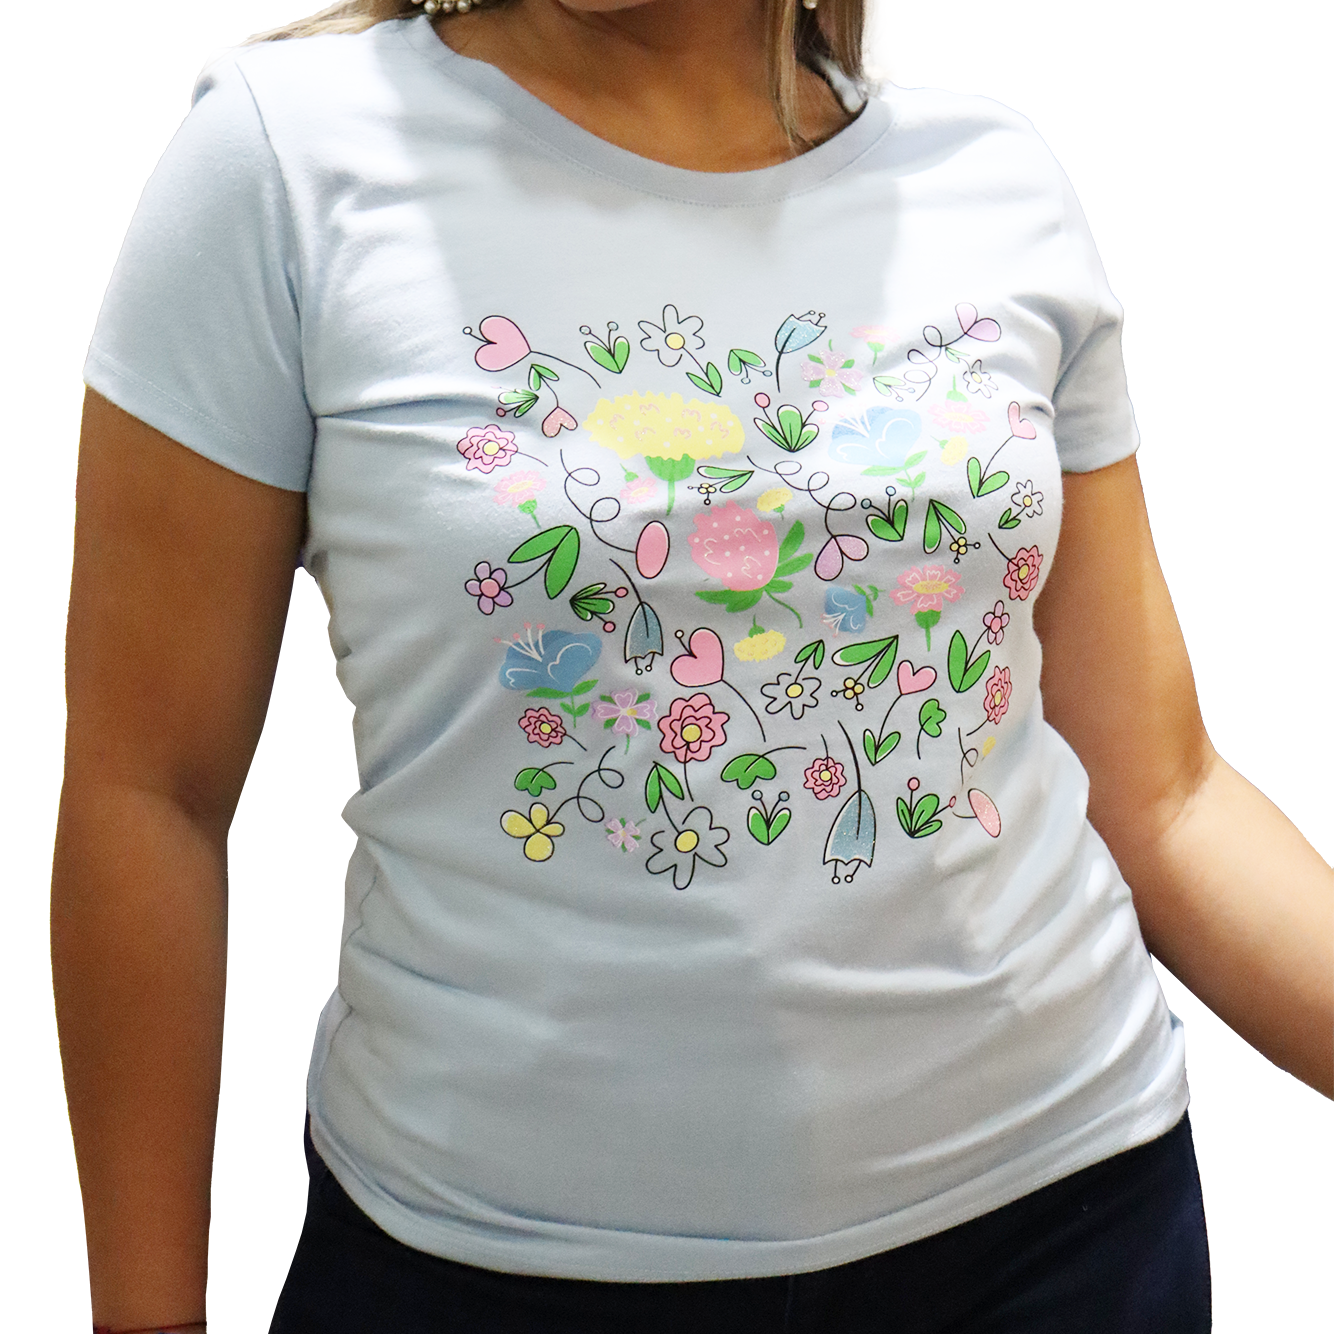 T-shirt Celeste con estampado de Flores